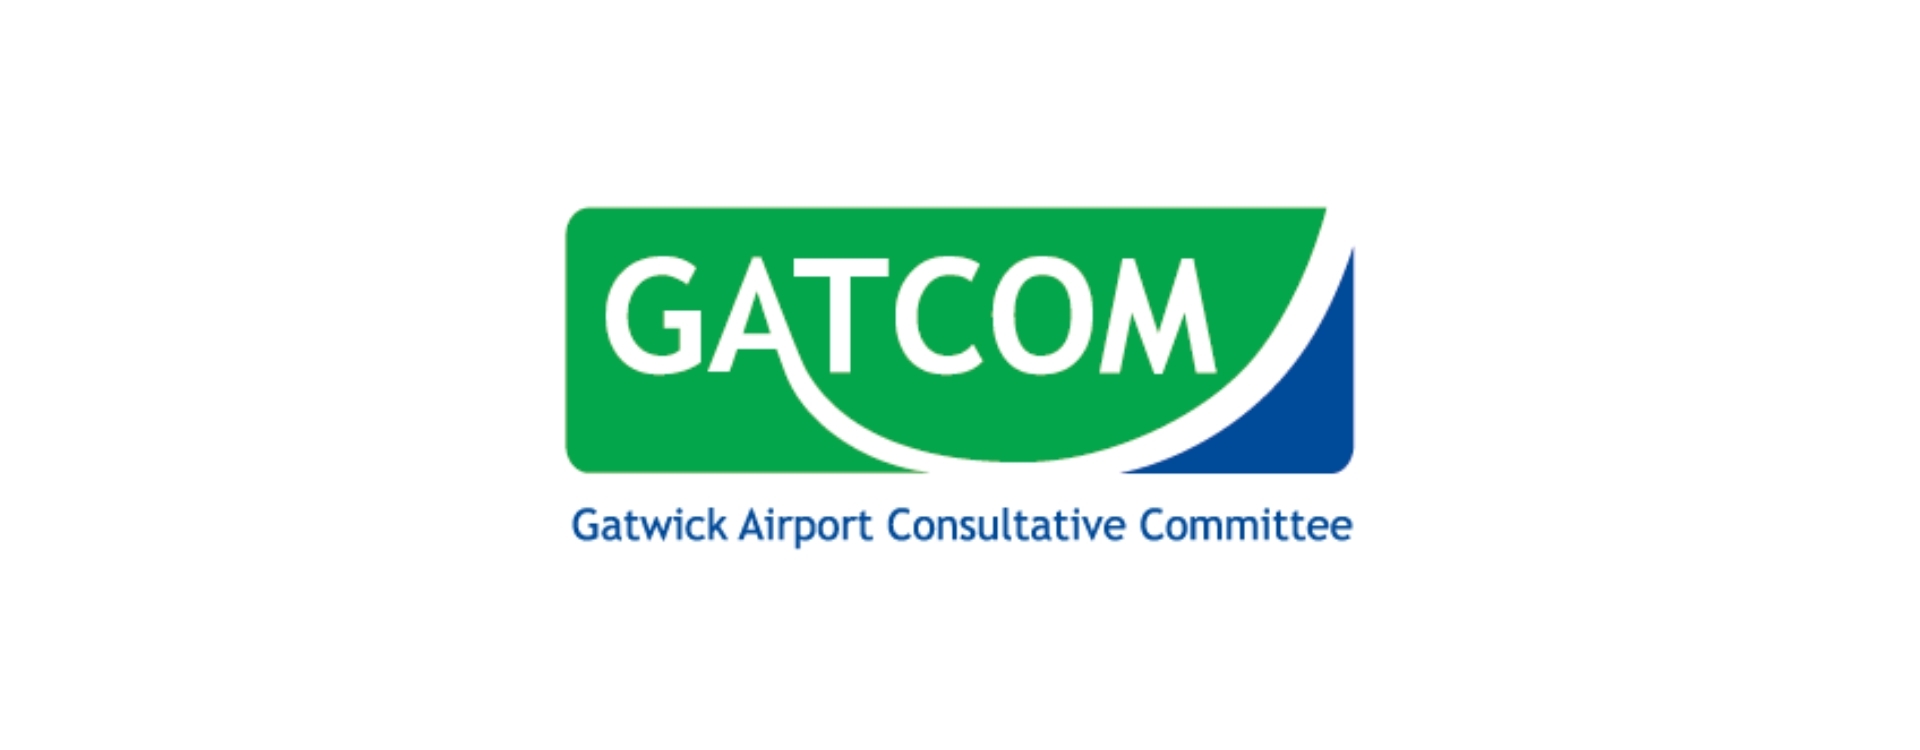 GATCOM News Bulletin